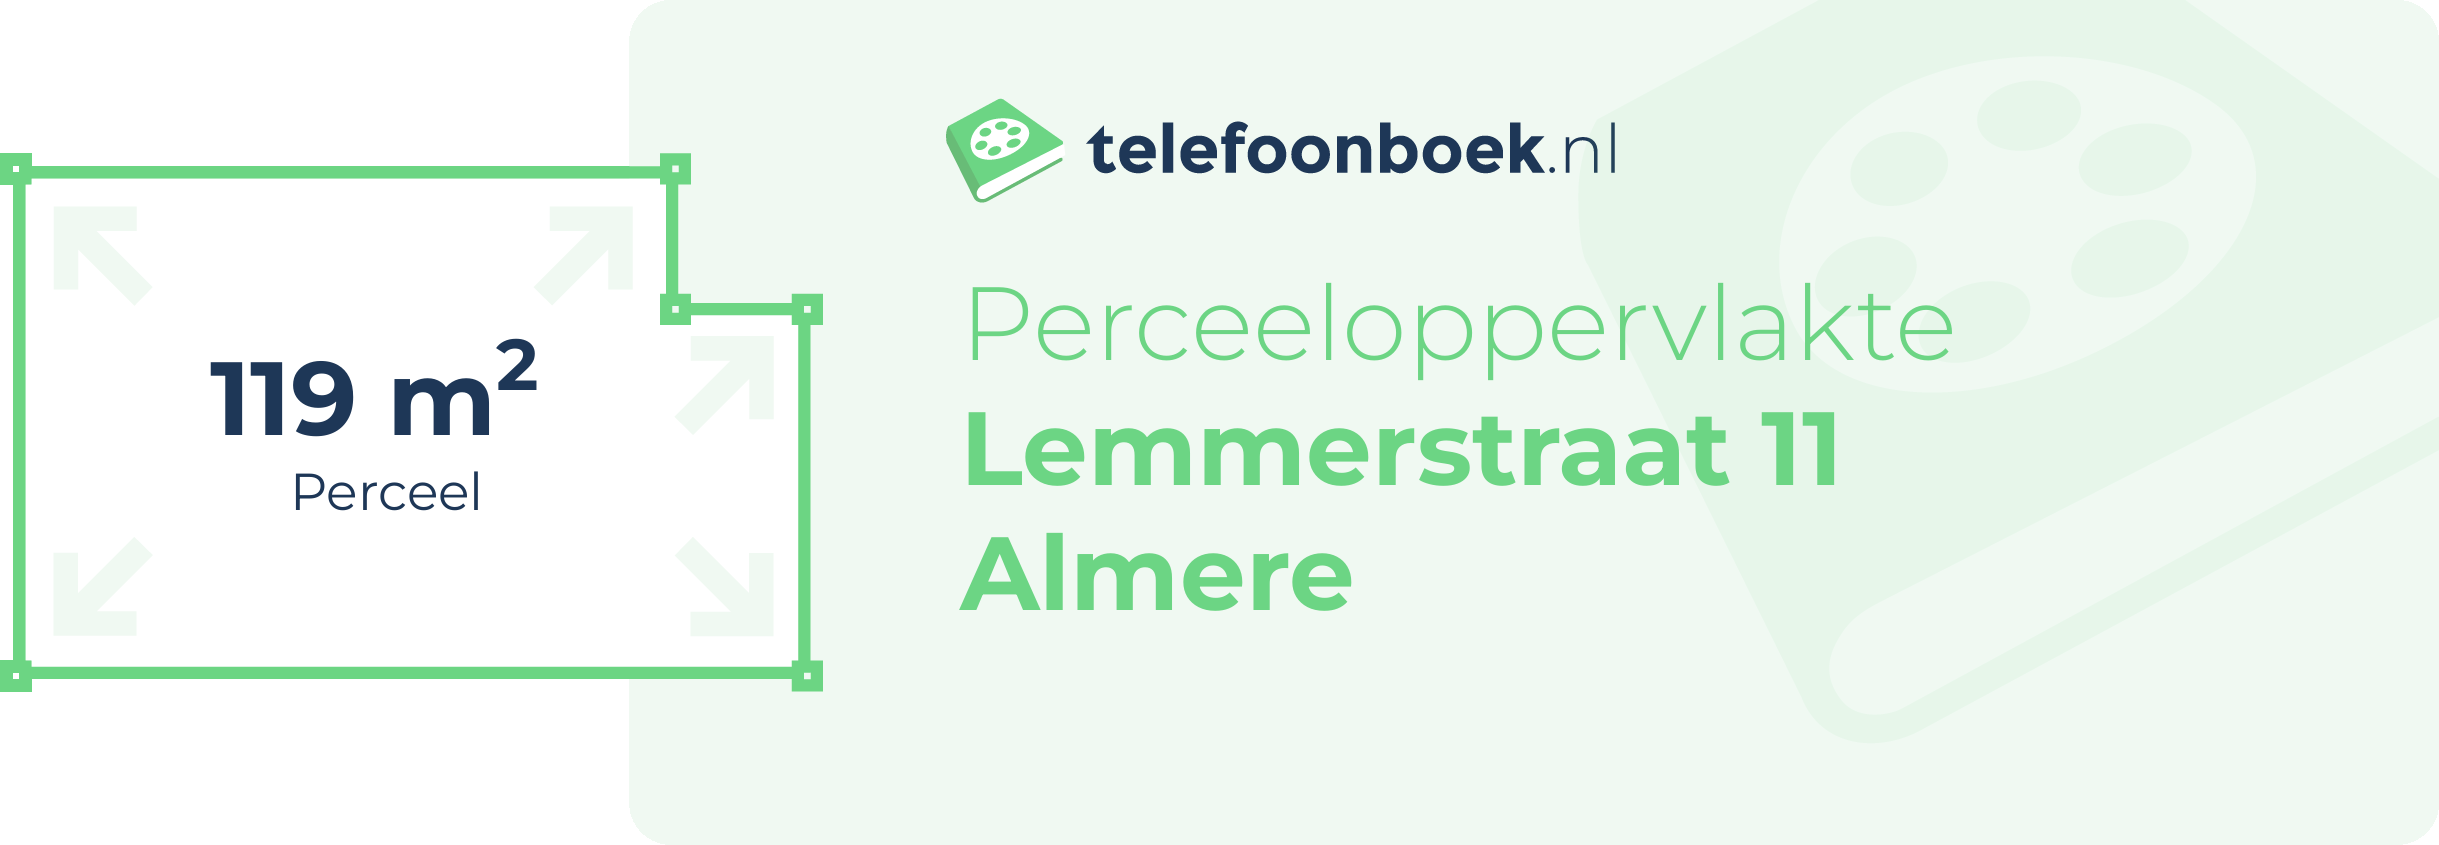 Perceeloppervlakte Lemmerstraat 11 Almere